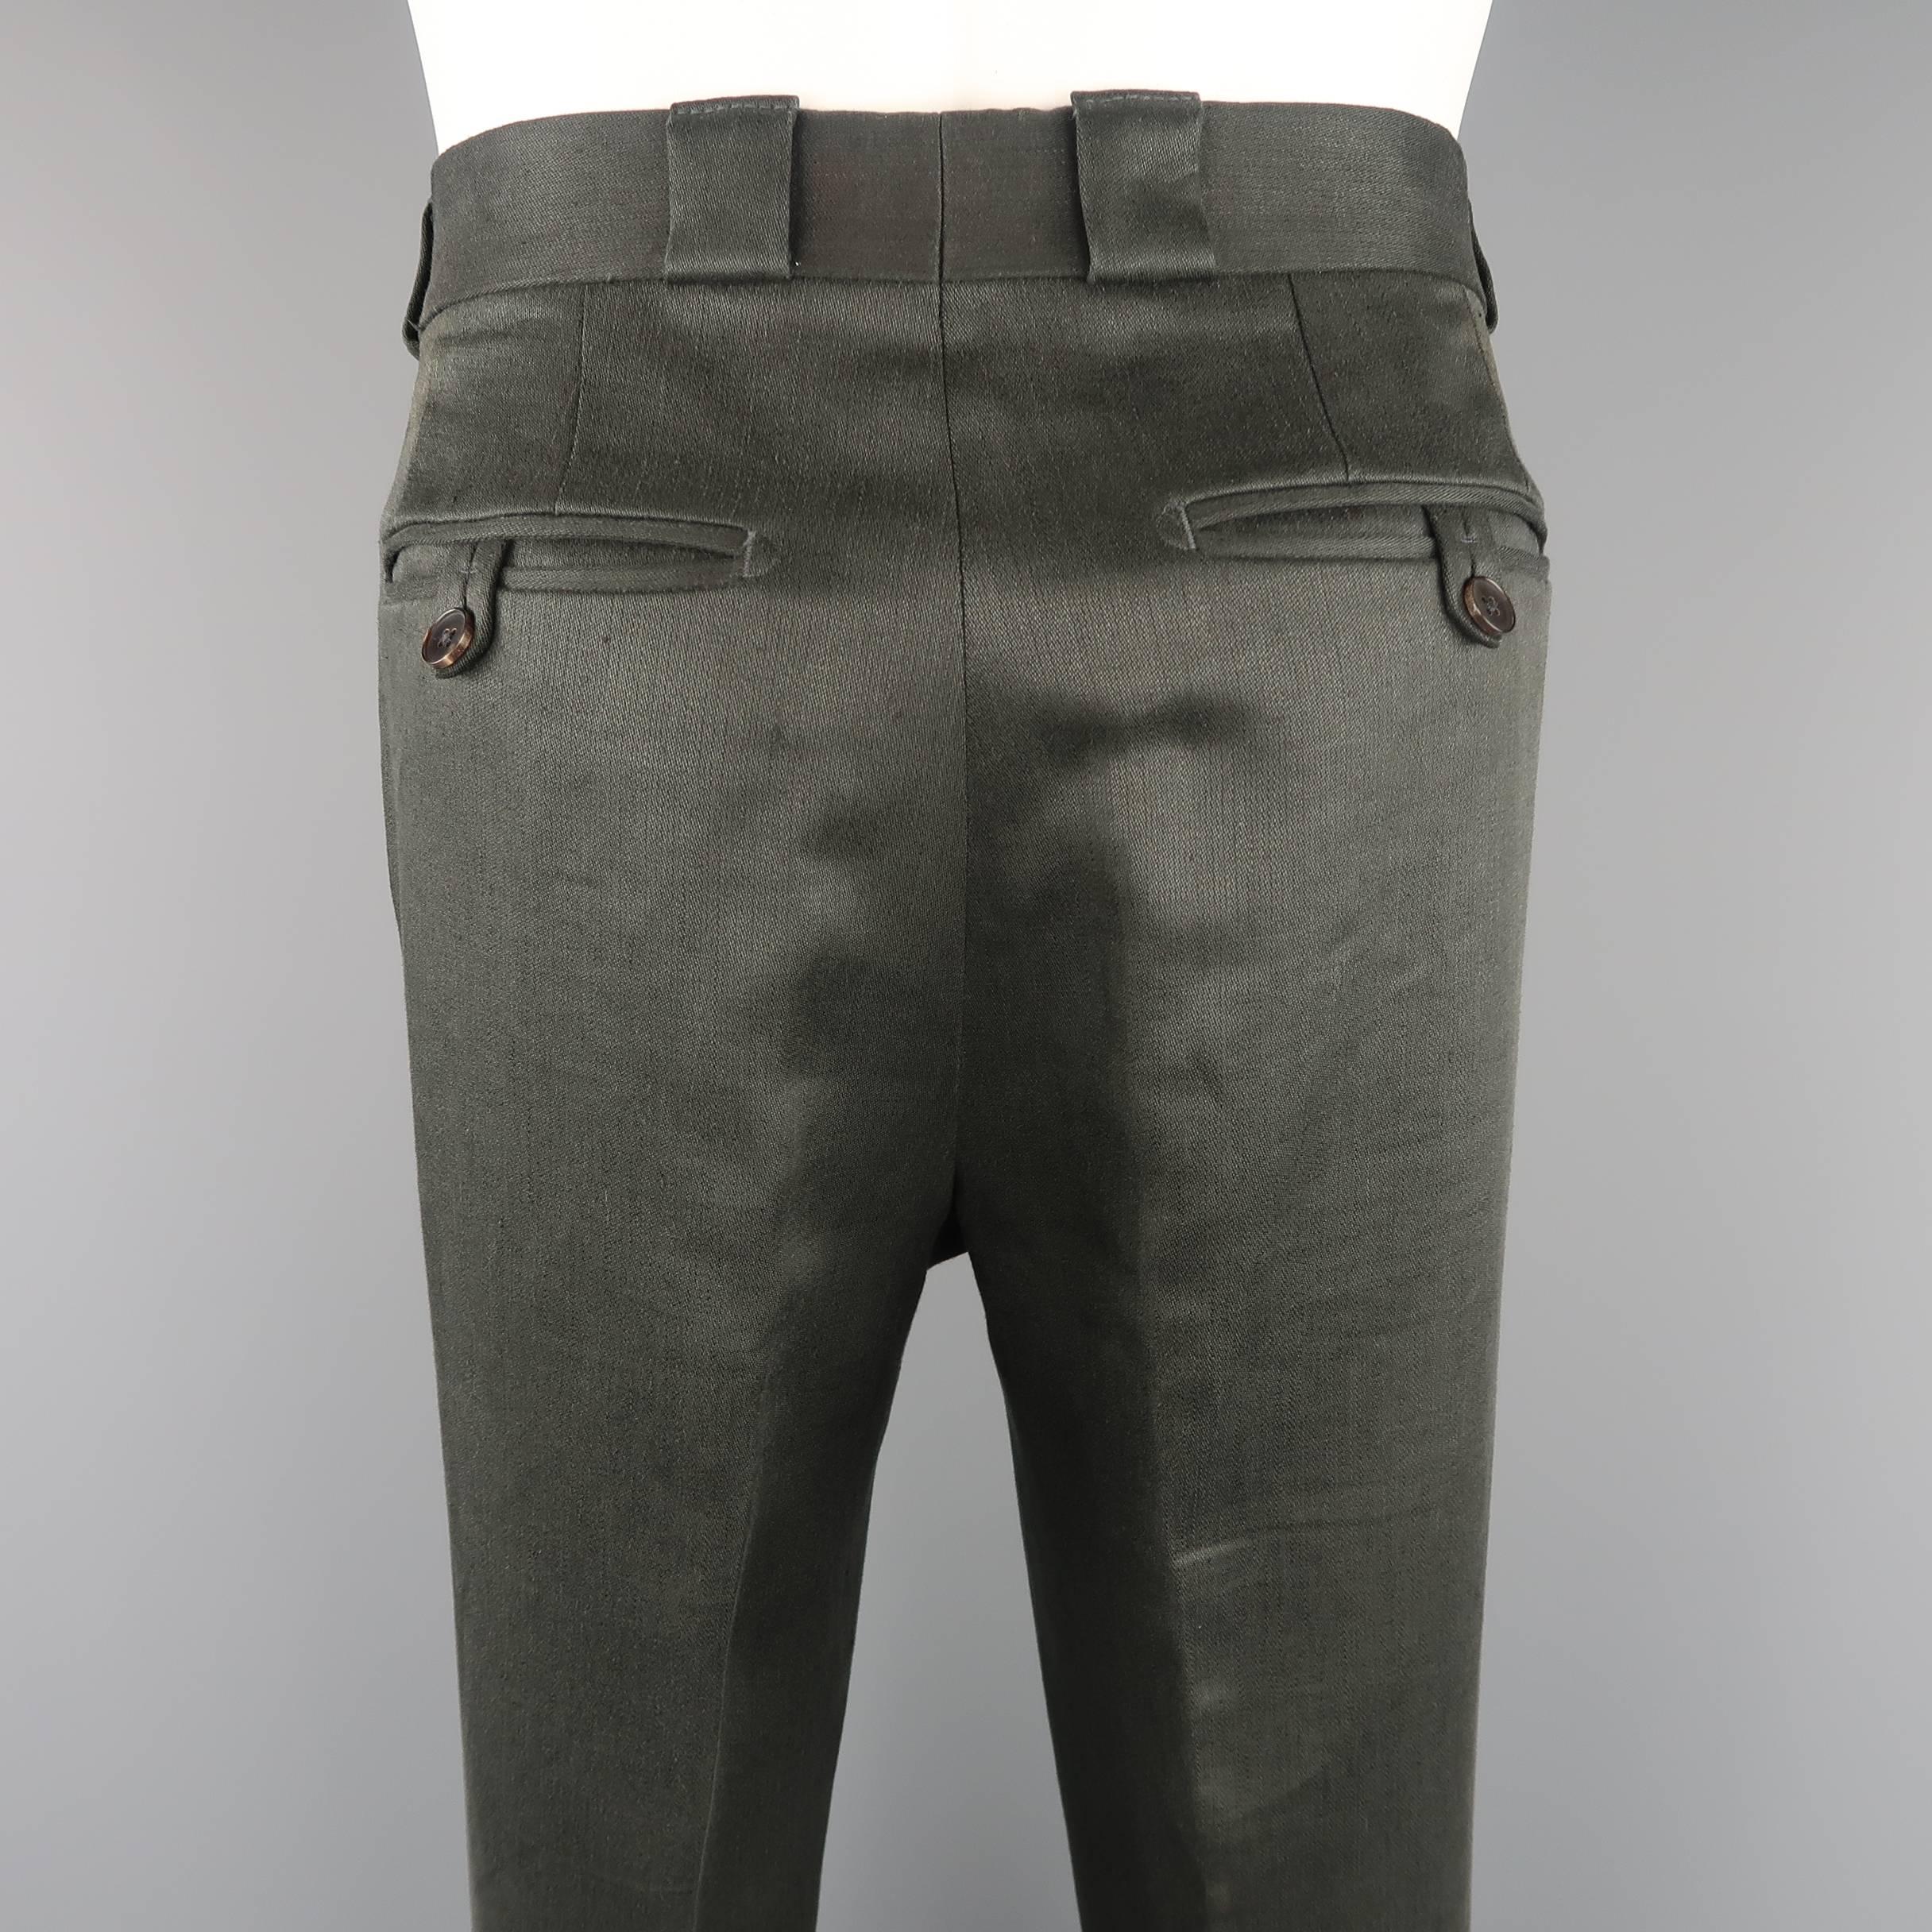 Black Men's TOM FORD Size 31 Forest Green Heavy Linen Dress Pants